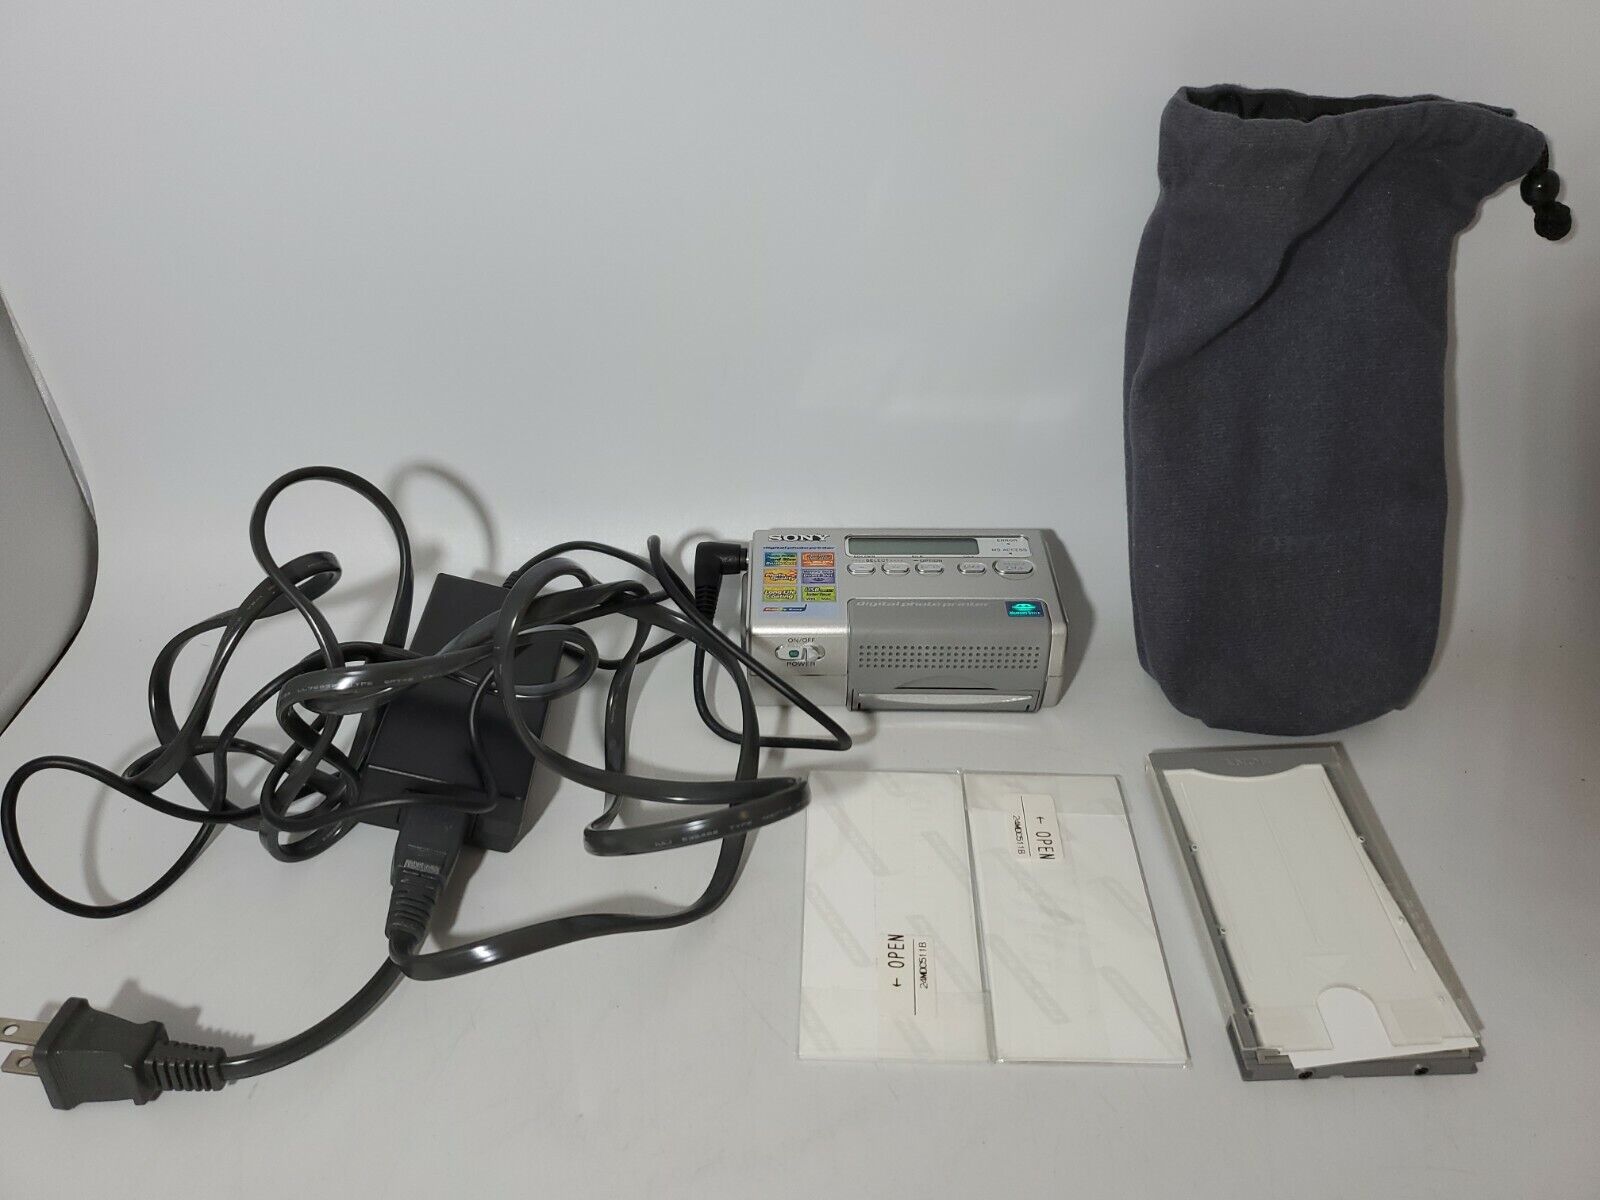 Sony DPP-MP1 Digital Printer With Accessories Very Rare